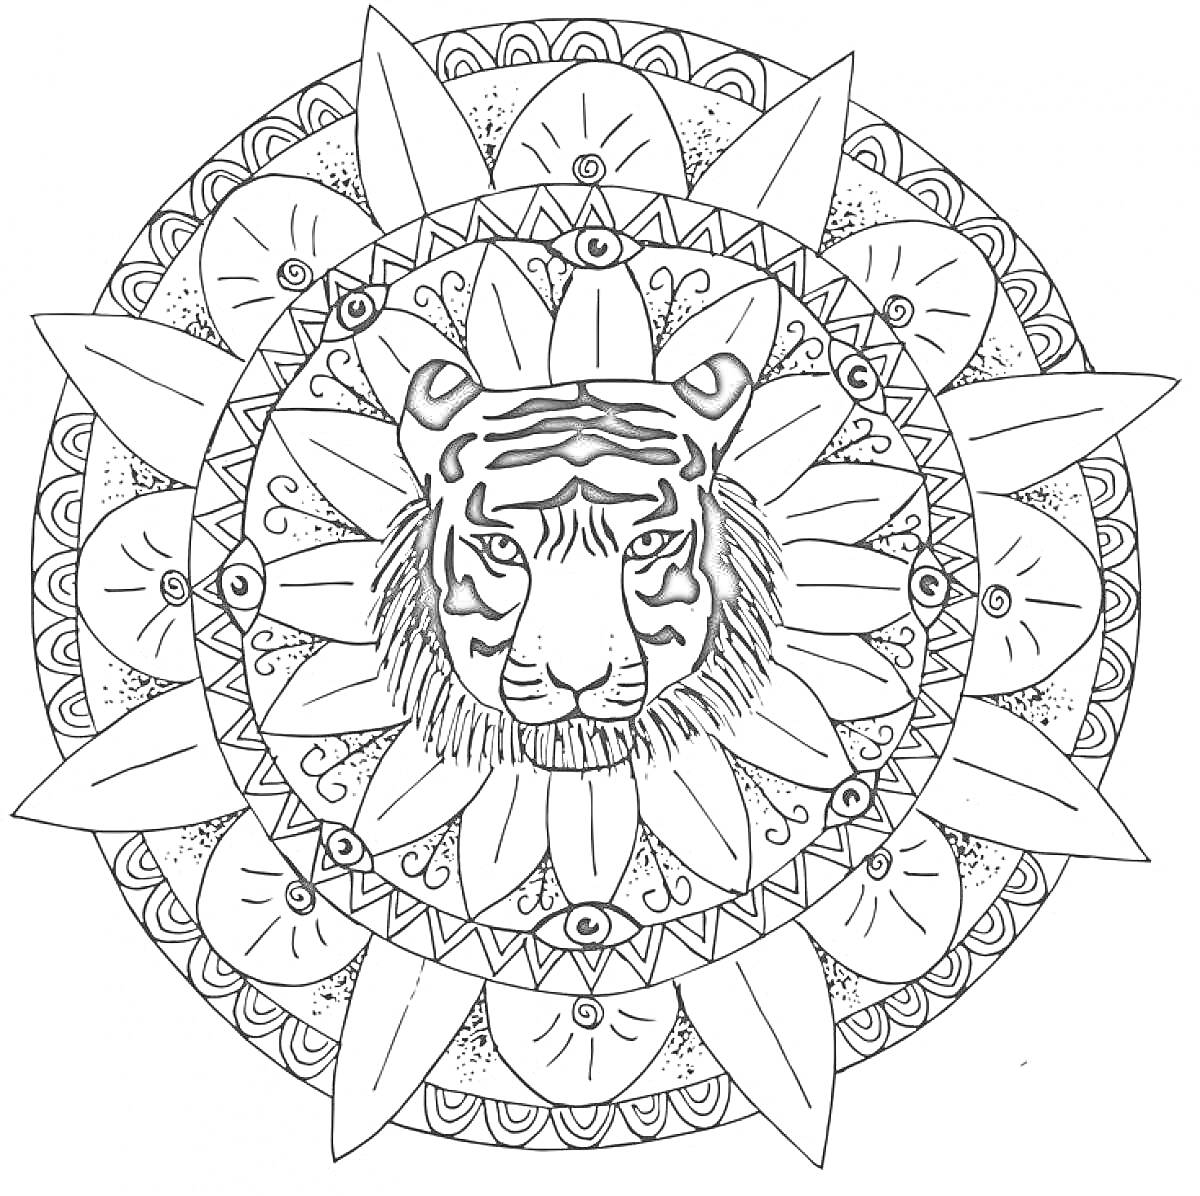 Раскраска Антистресс раскраска с изображением тигра в центре мандалы с лепестками и геометрическими узорами